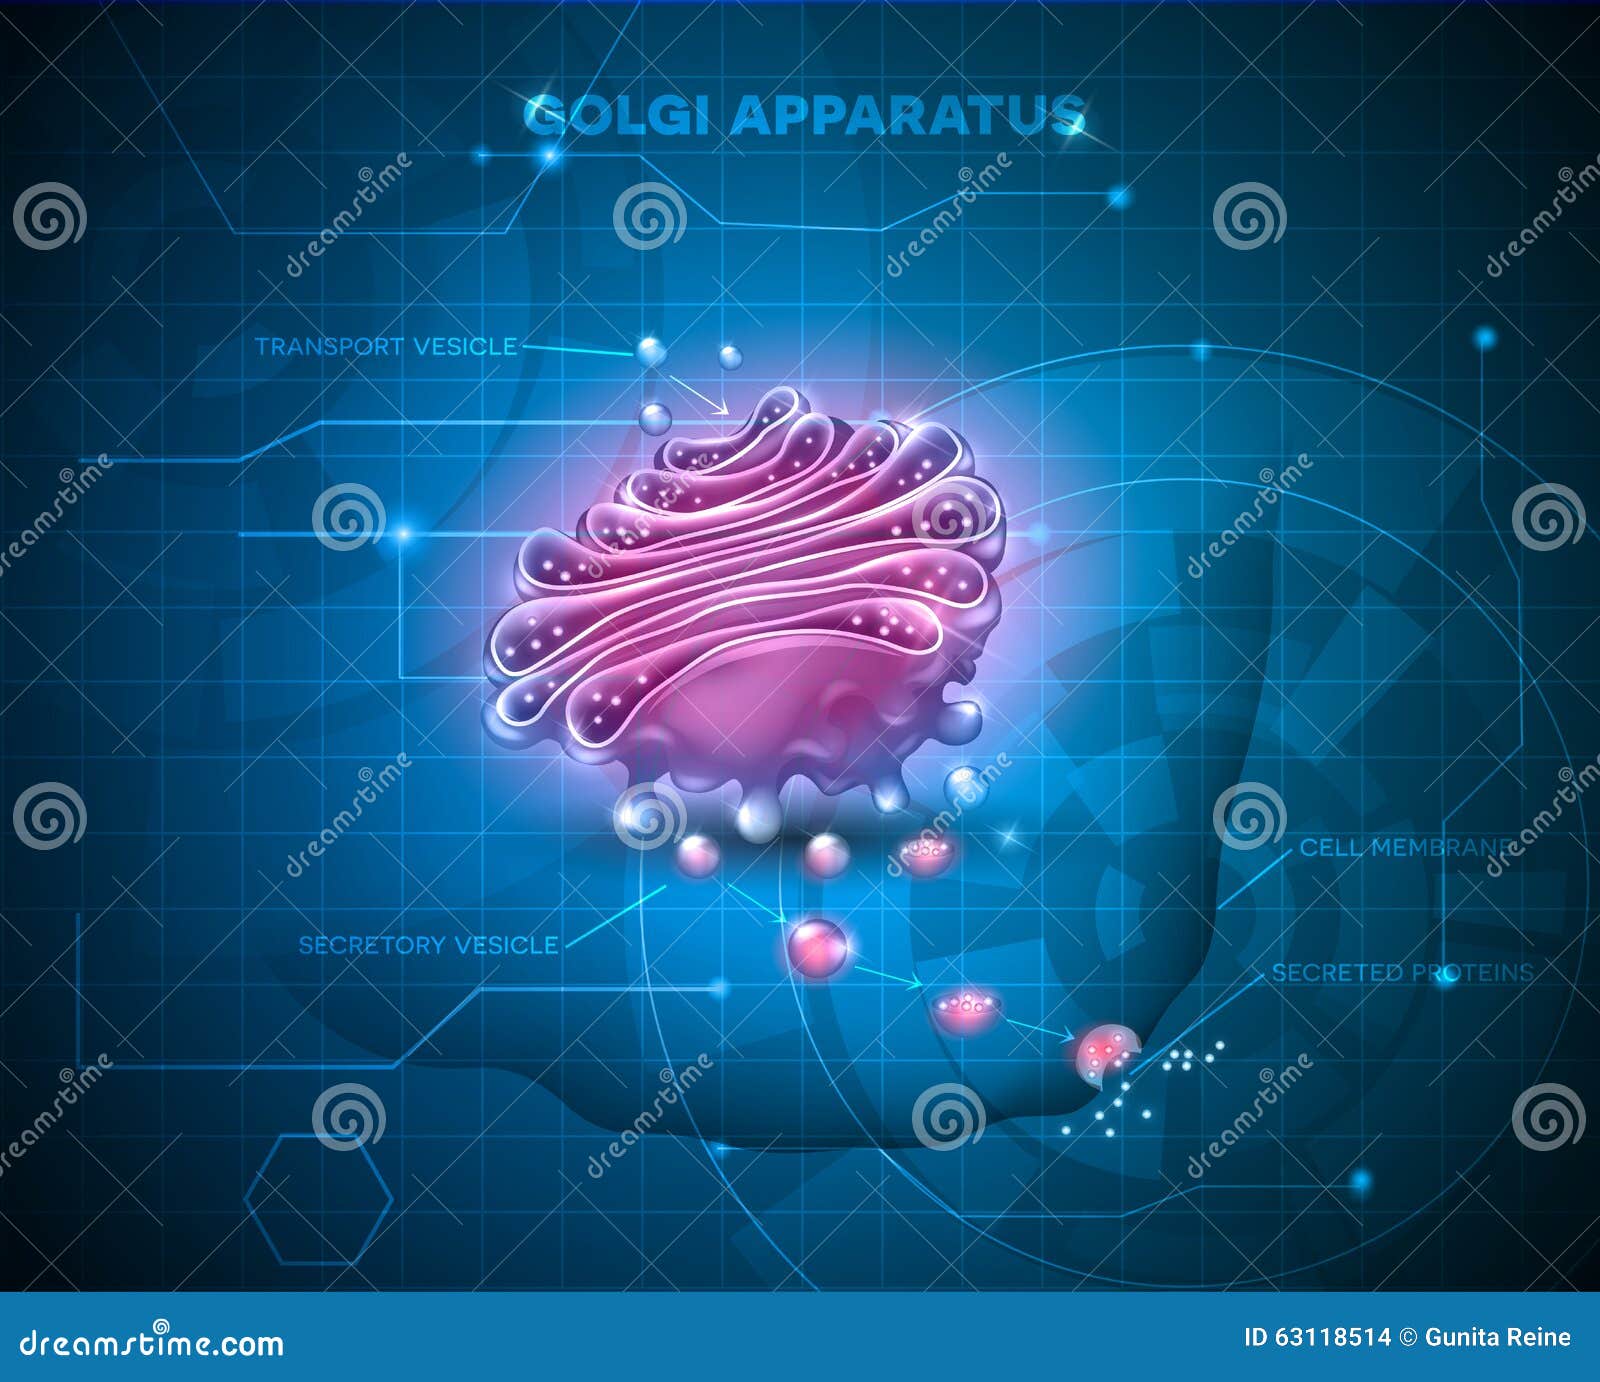 golgi apparatus abstract technology background